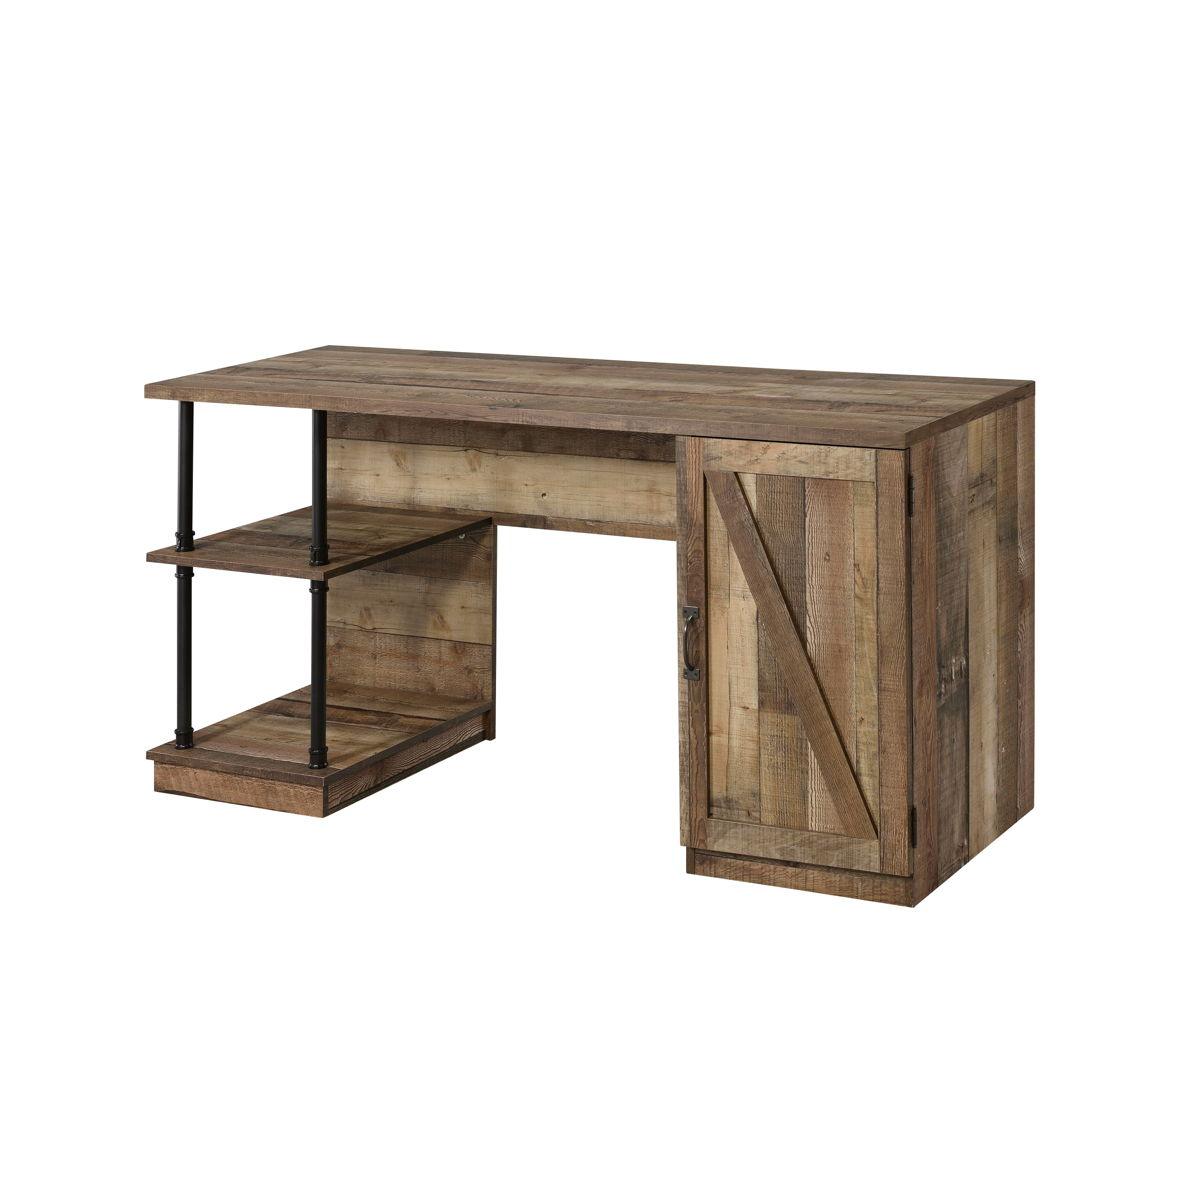 ACME - Canna - Writing Desk - Rustic Oak & Black Finish - 5th Avenue Furniture